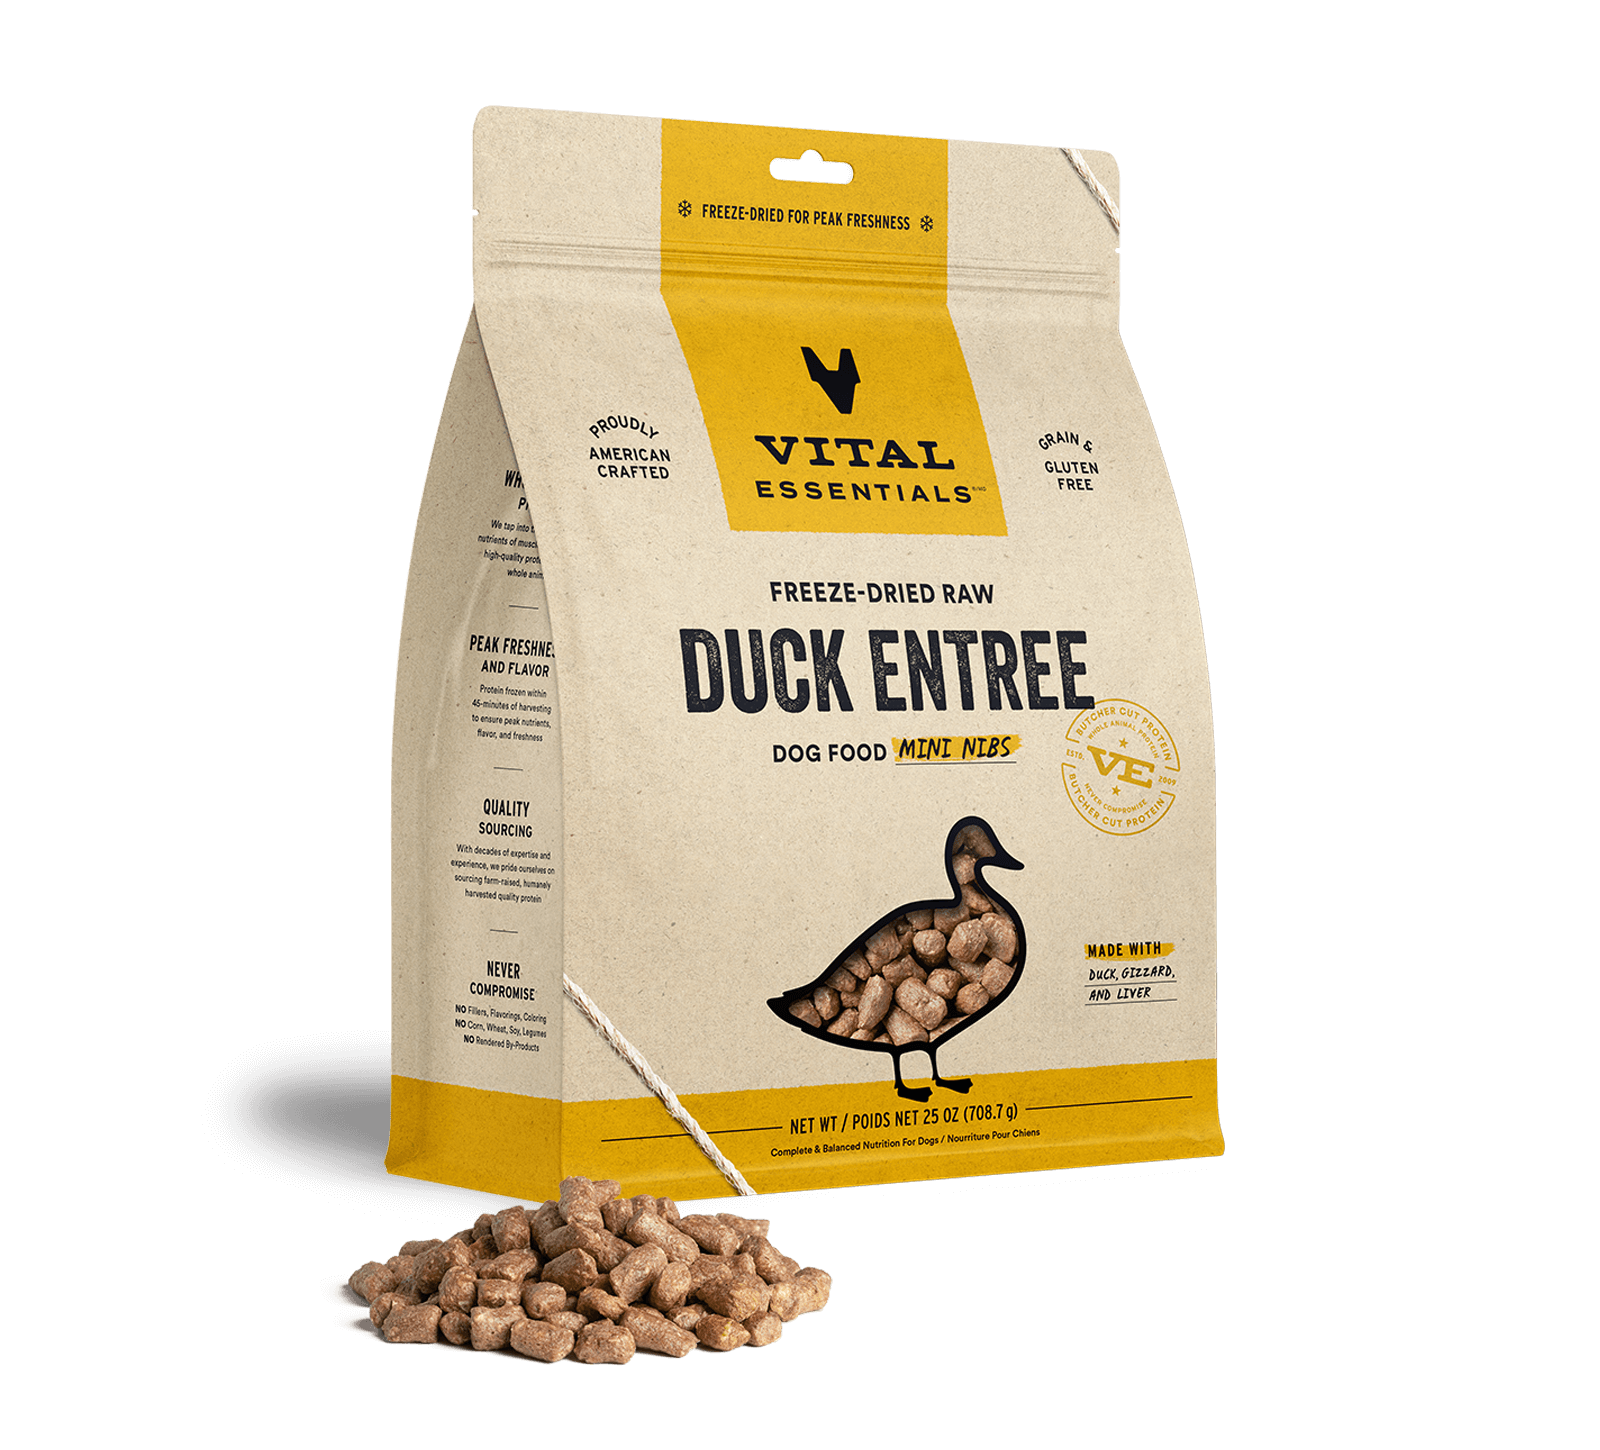 Vital Essentials Freeze-Dried Raw Duck Entree Dog Food Mini Nibs, 25 oz - Items on Sale Now